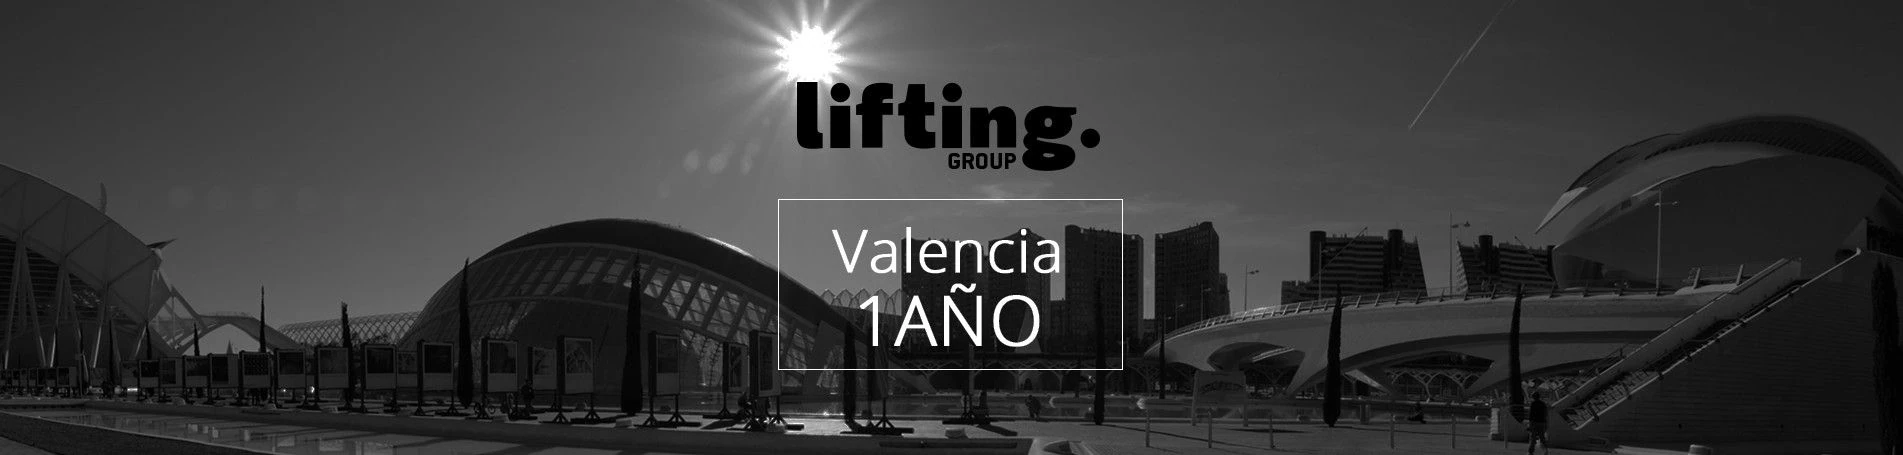 Lifting Group Valencia cumple un año ayudando a crecer a empresas en Valencia y Castellón